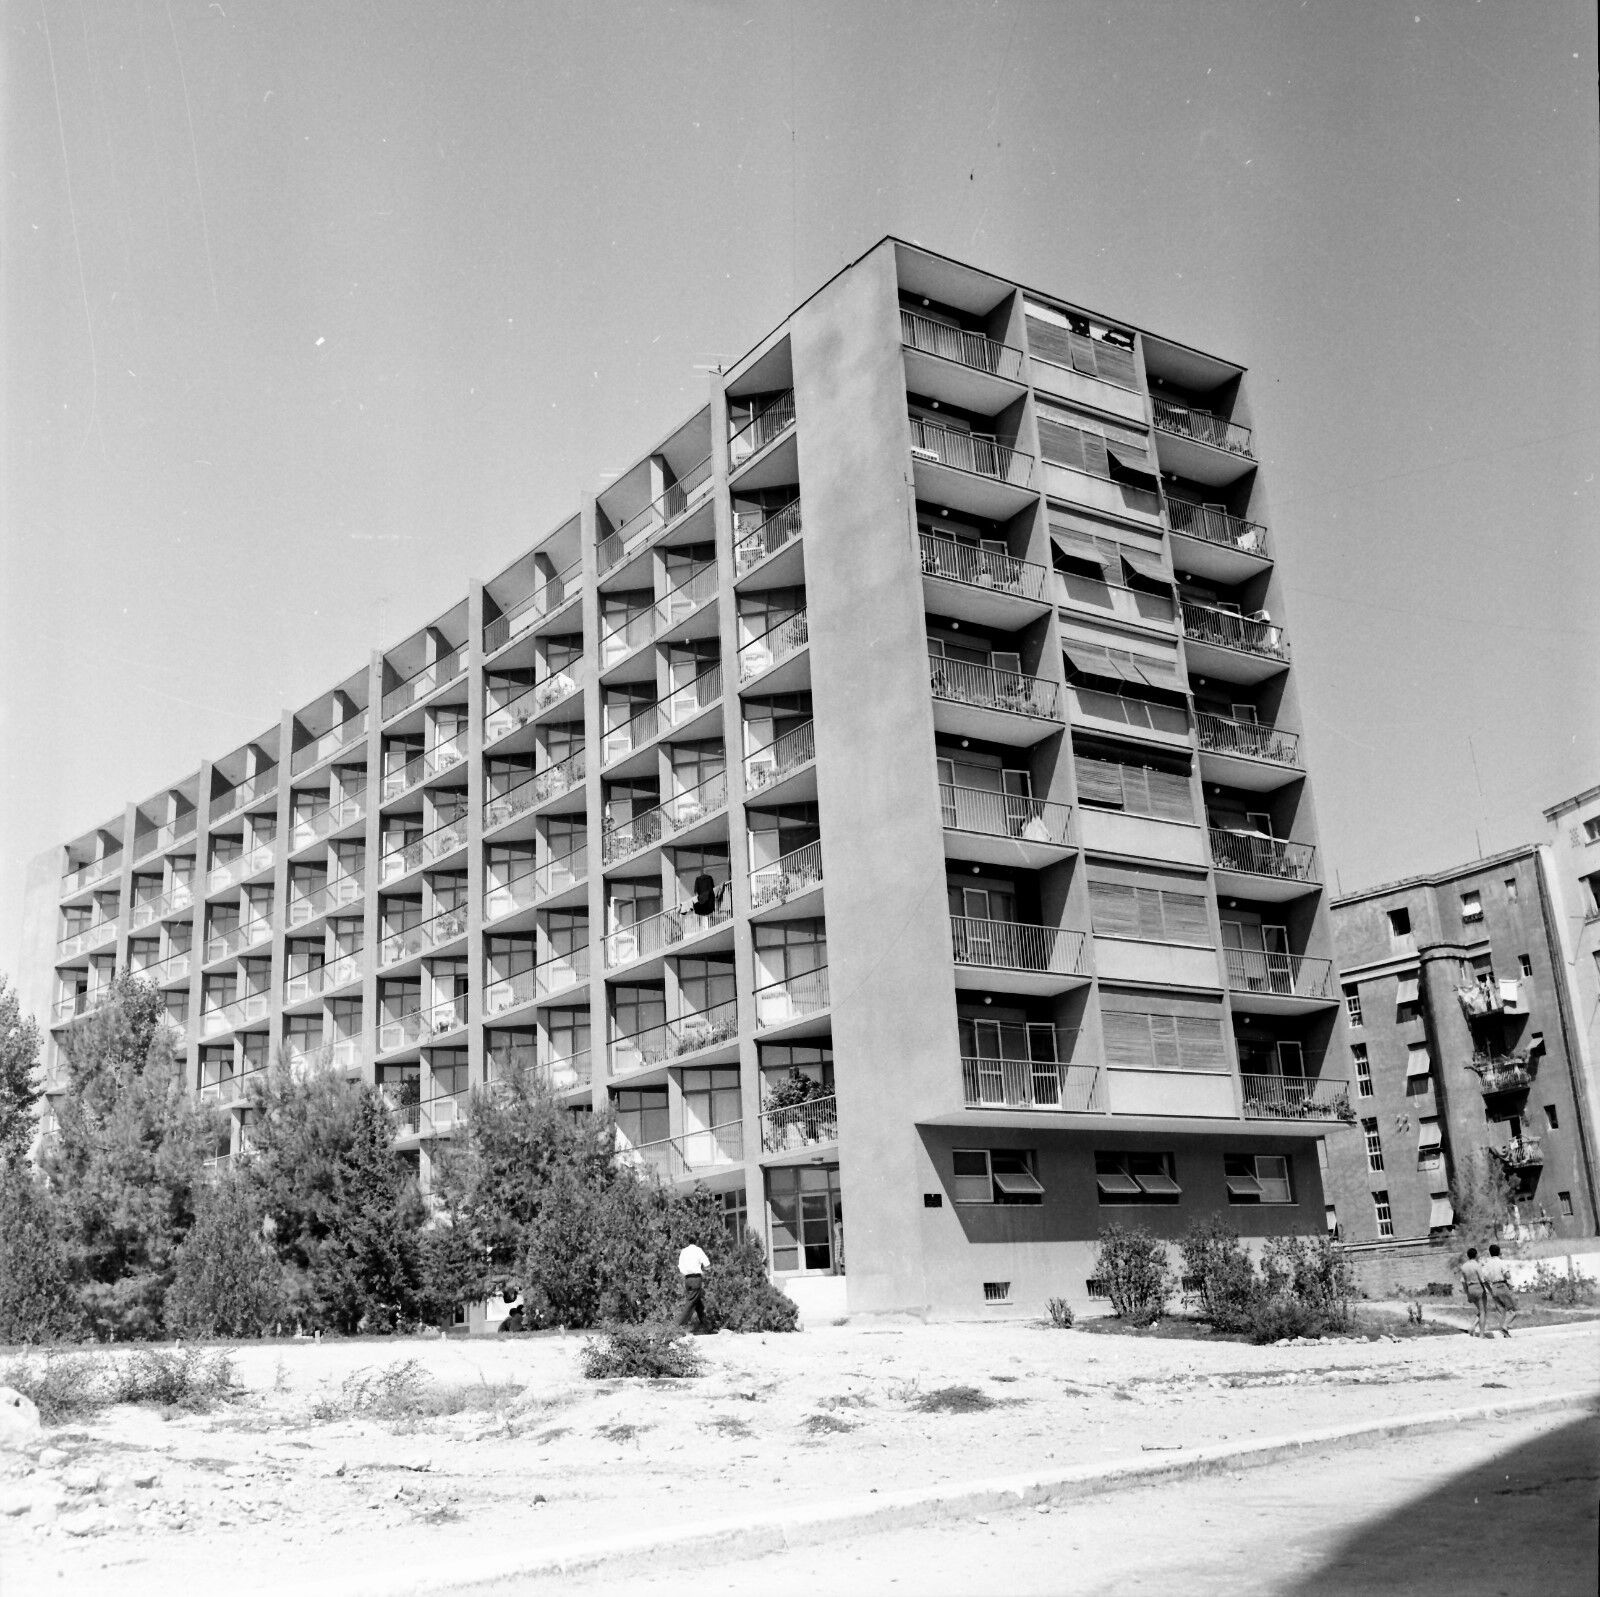 1960 SPLIT - New Buildings Croatia - Negative 6 x 6 - YOUG 65